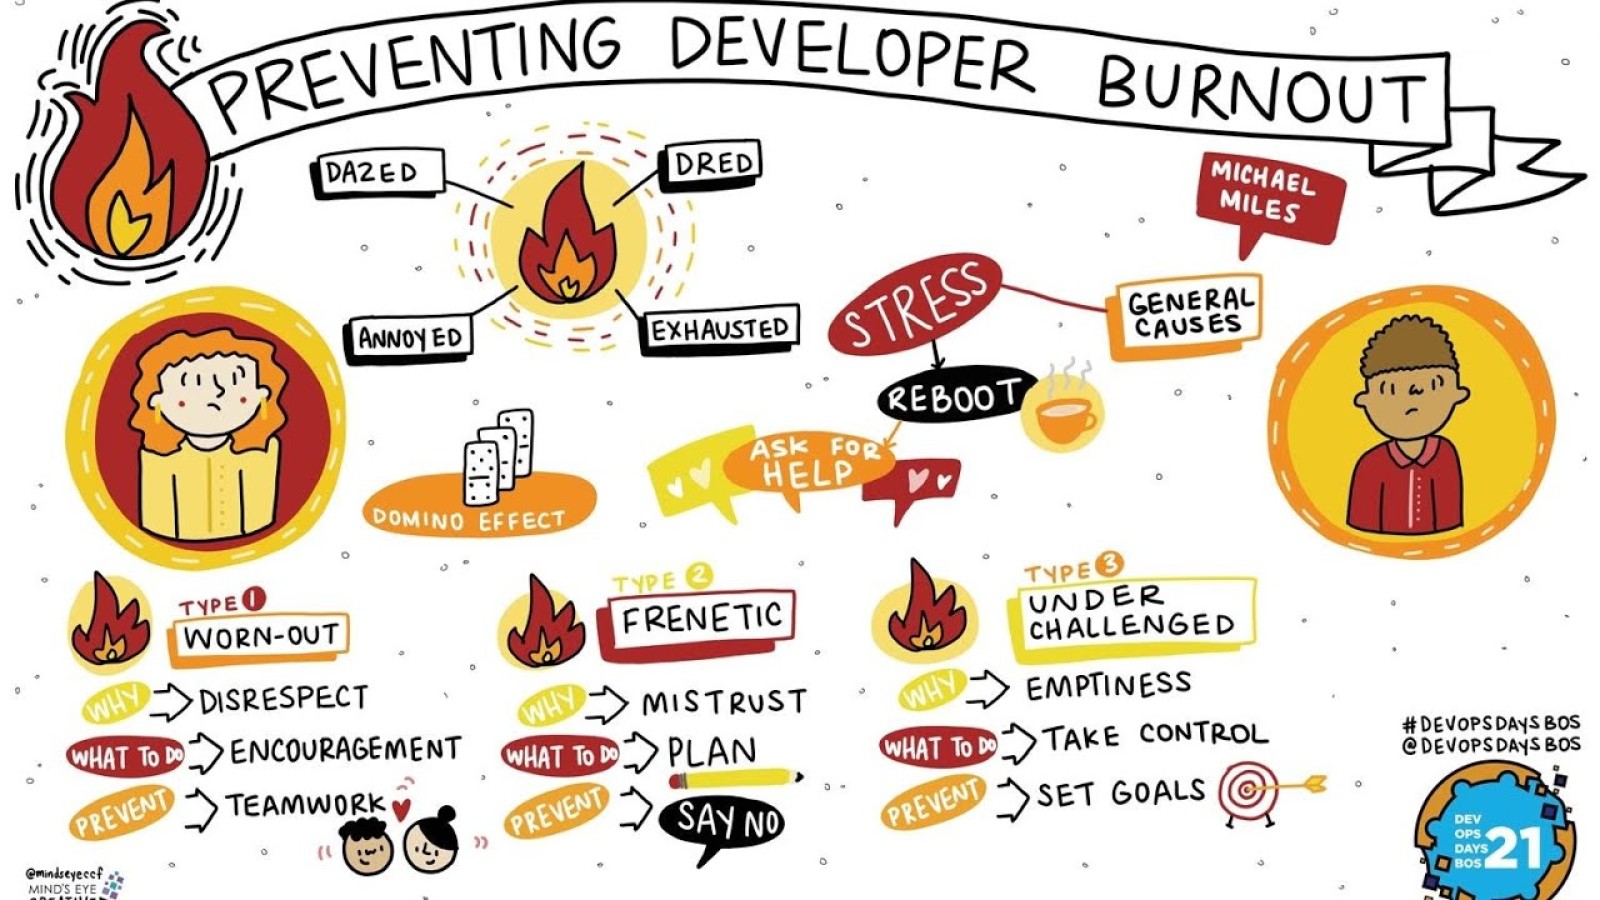 Preventing Developer Burnout